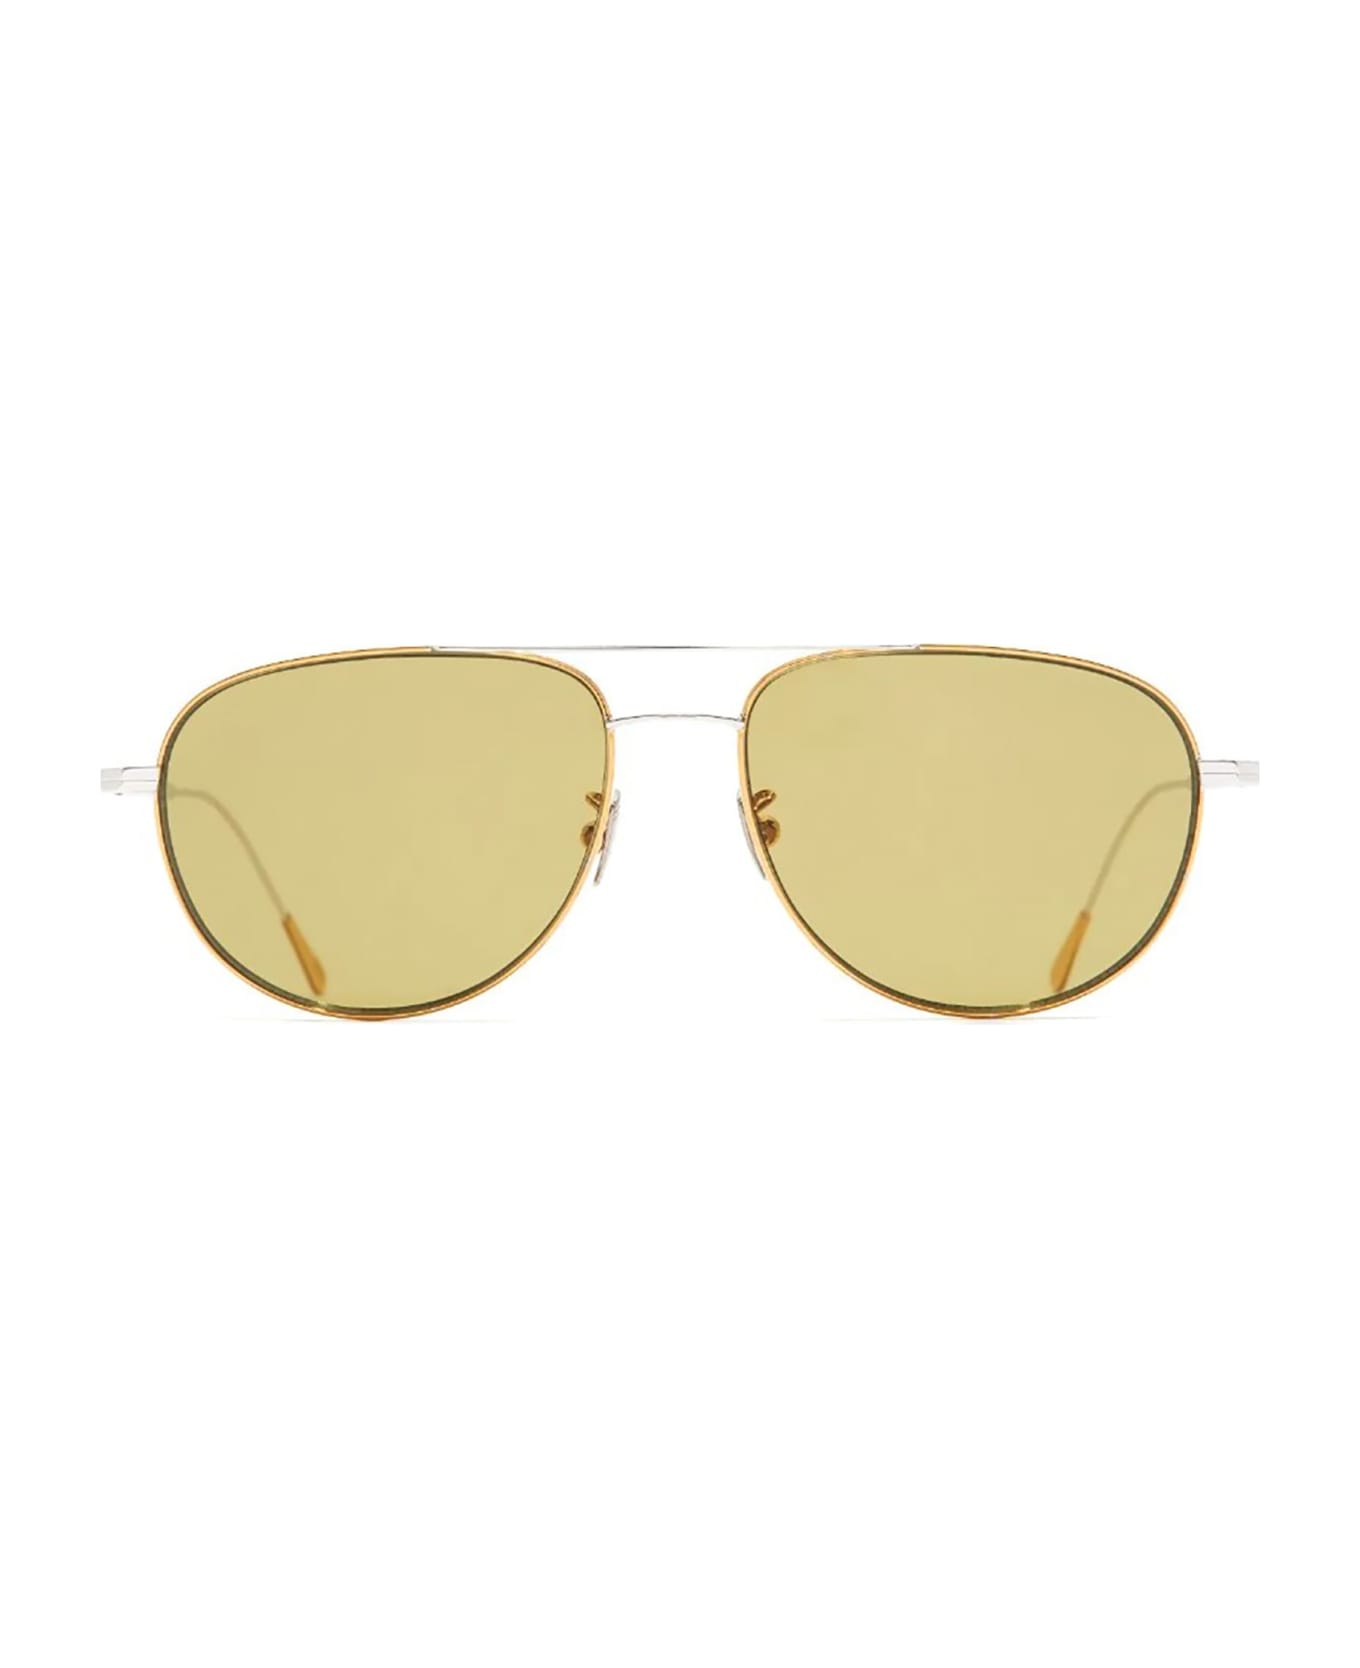 Cutler and Gross 0002 Sunglasses - Kt サングラス